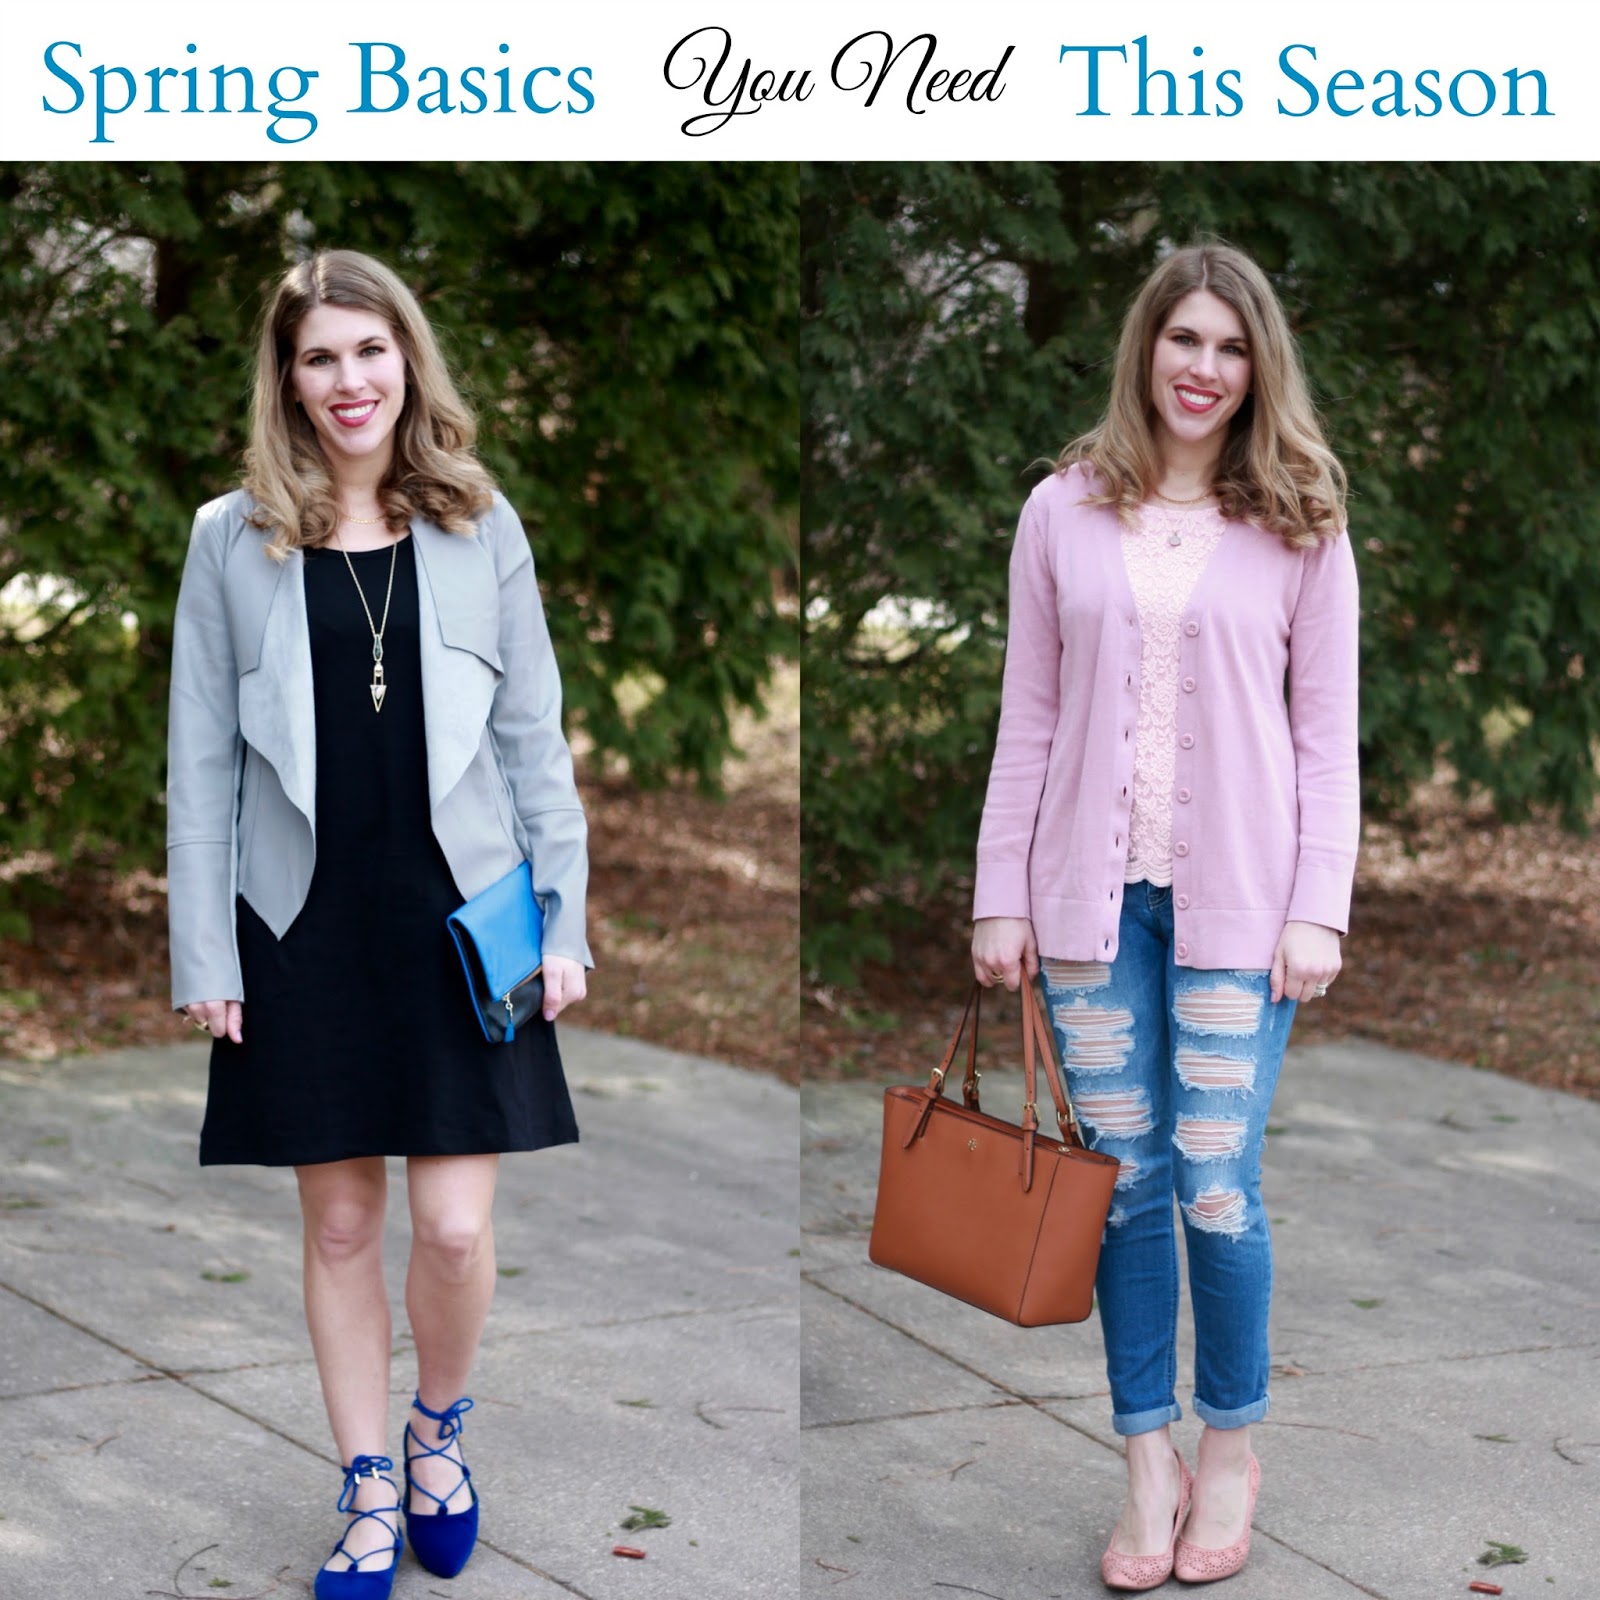 Spring Basics You Need This Season